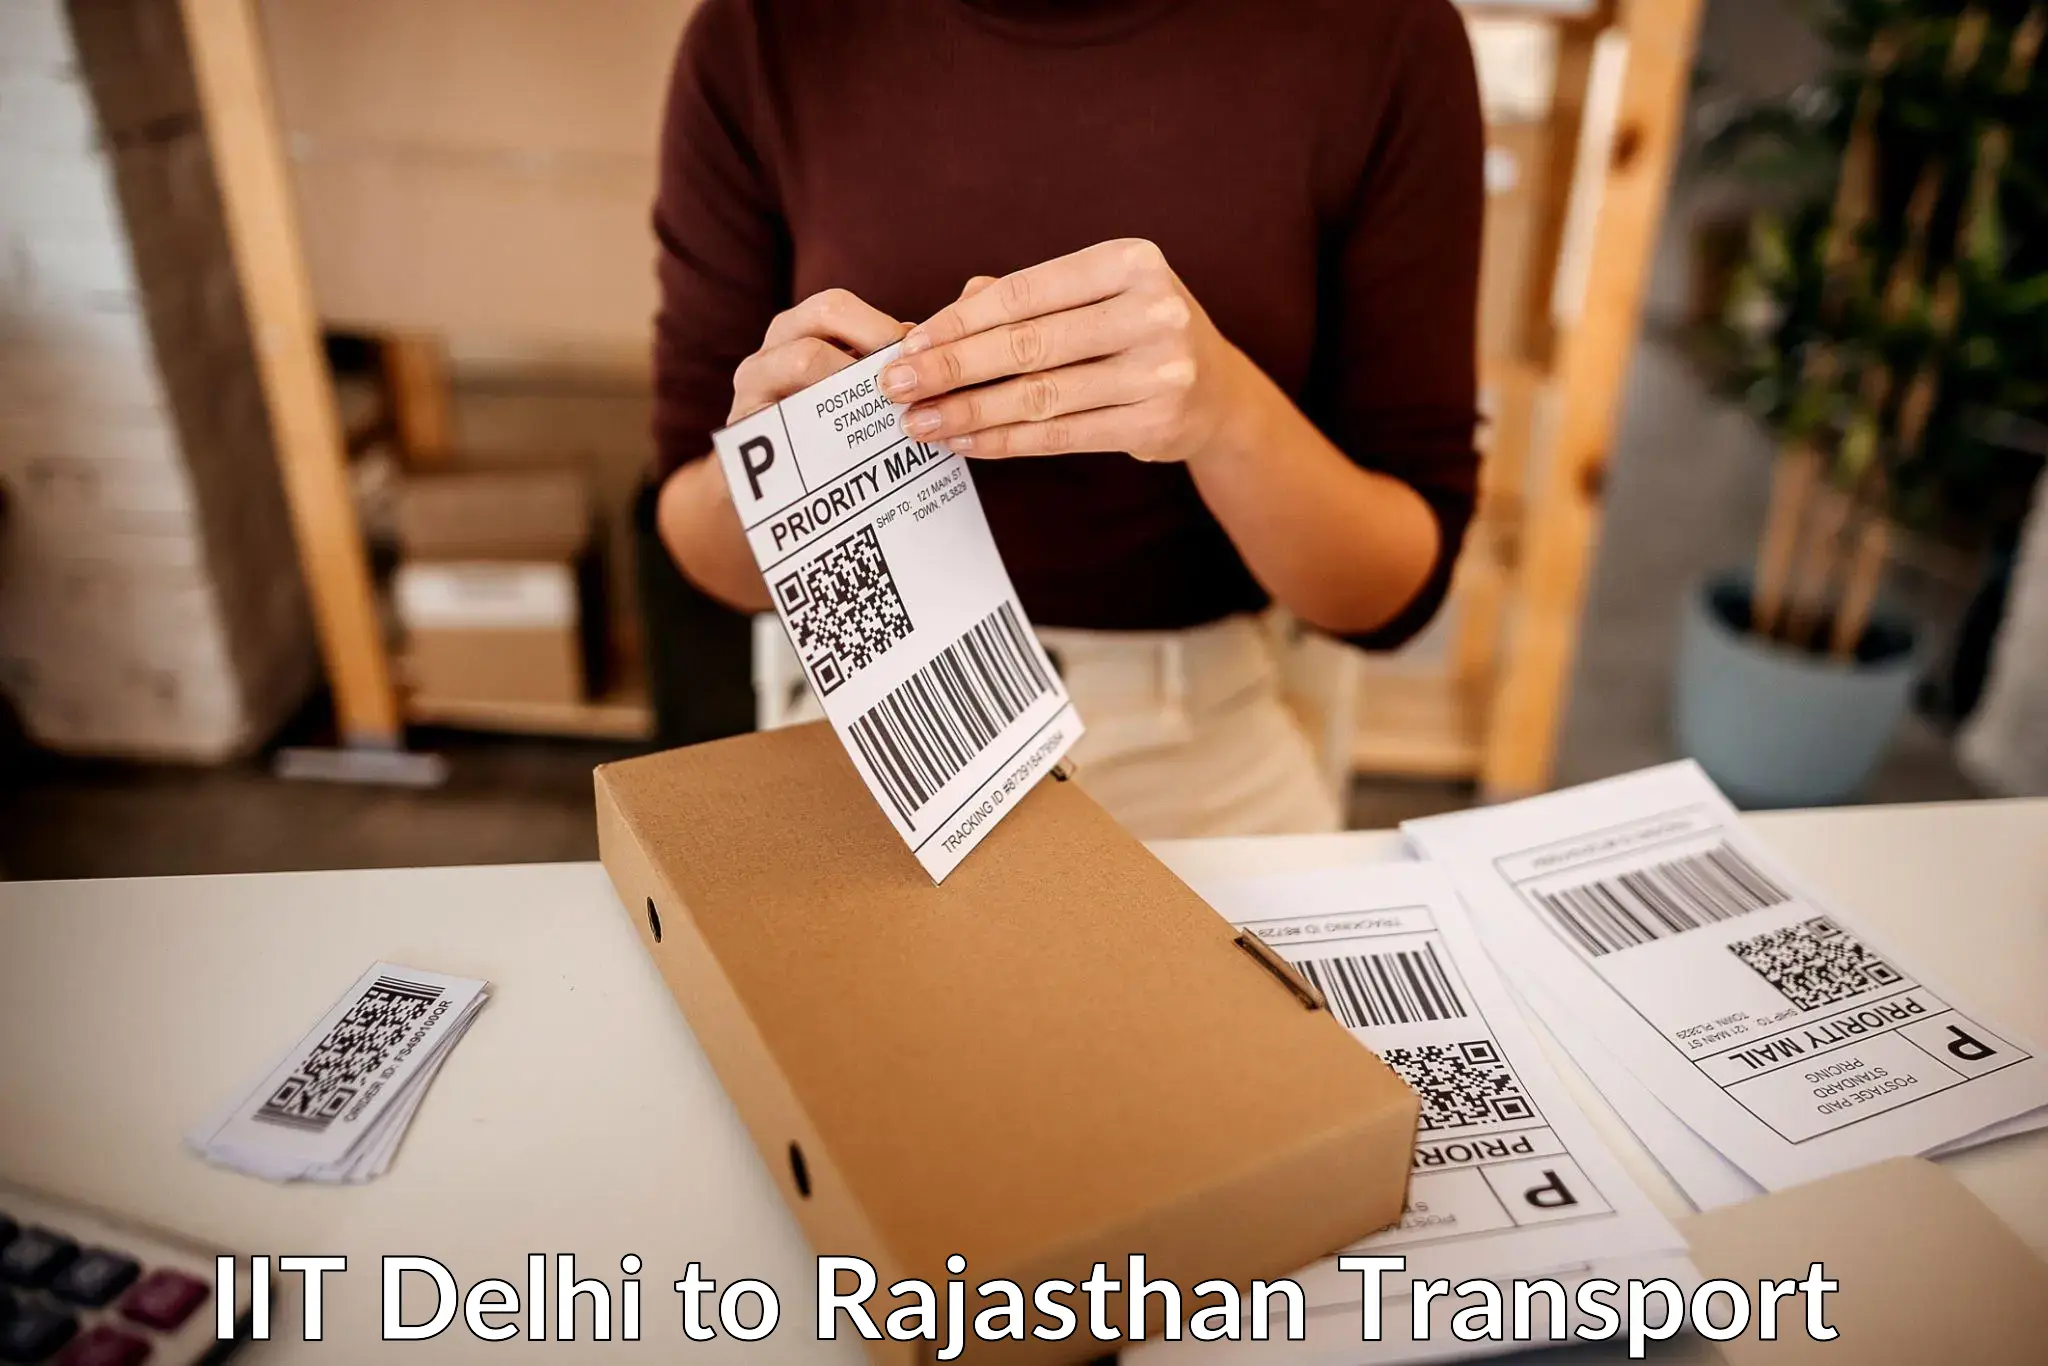 Delivery service IIT Delhi to Kherli